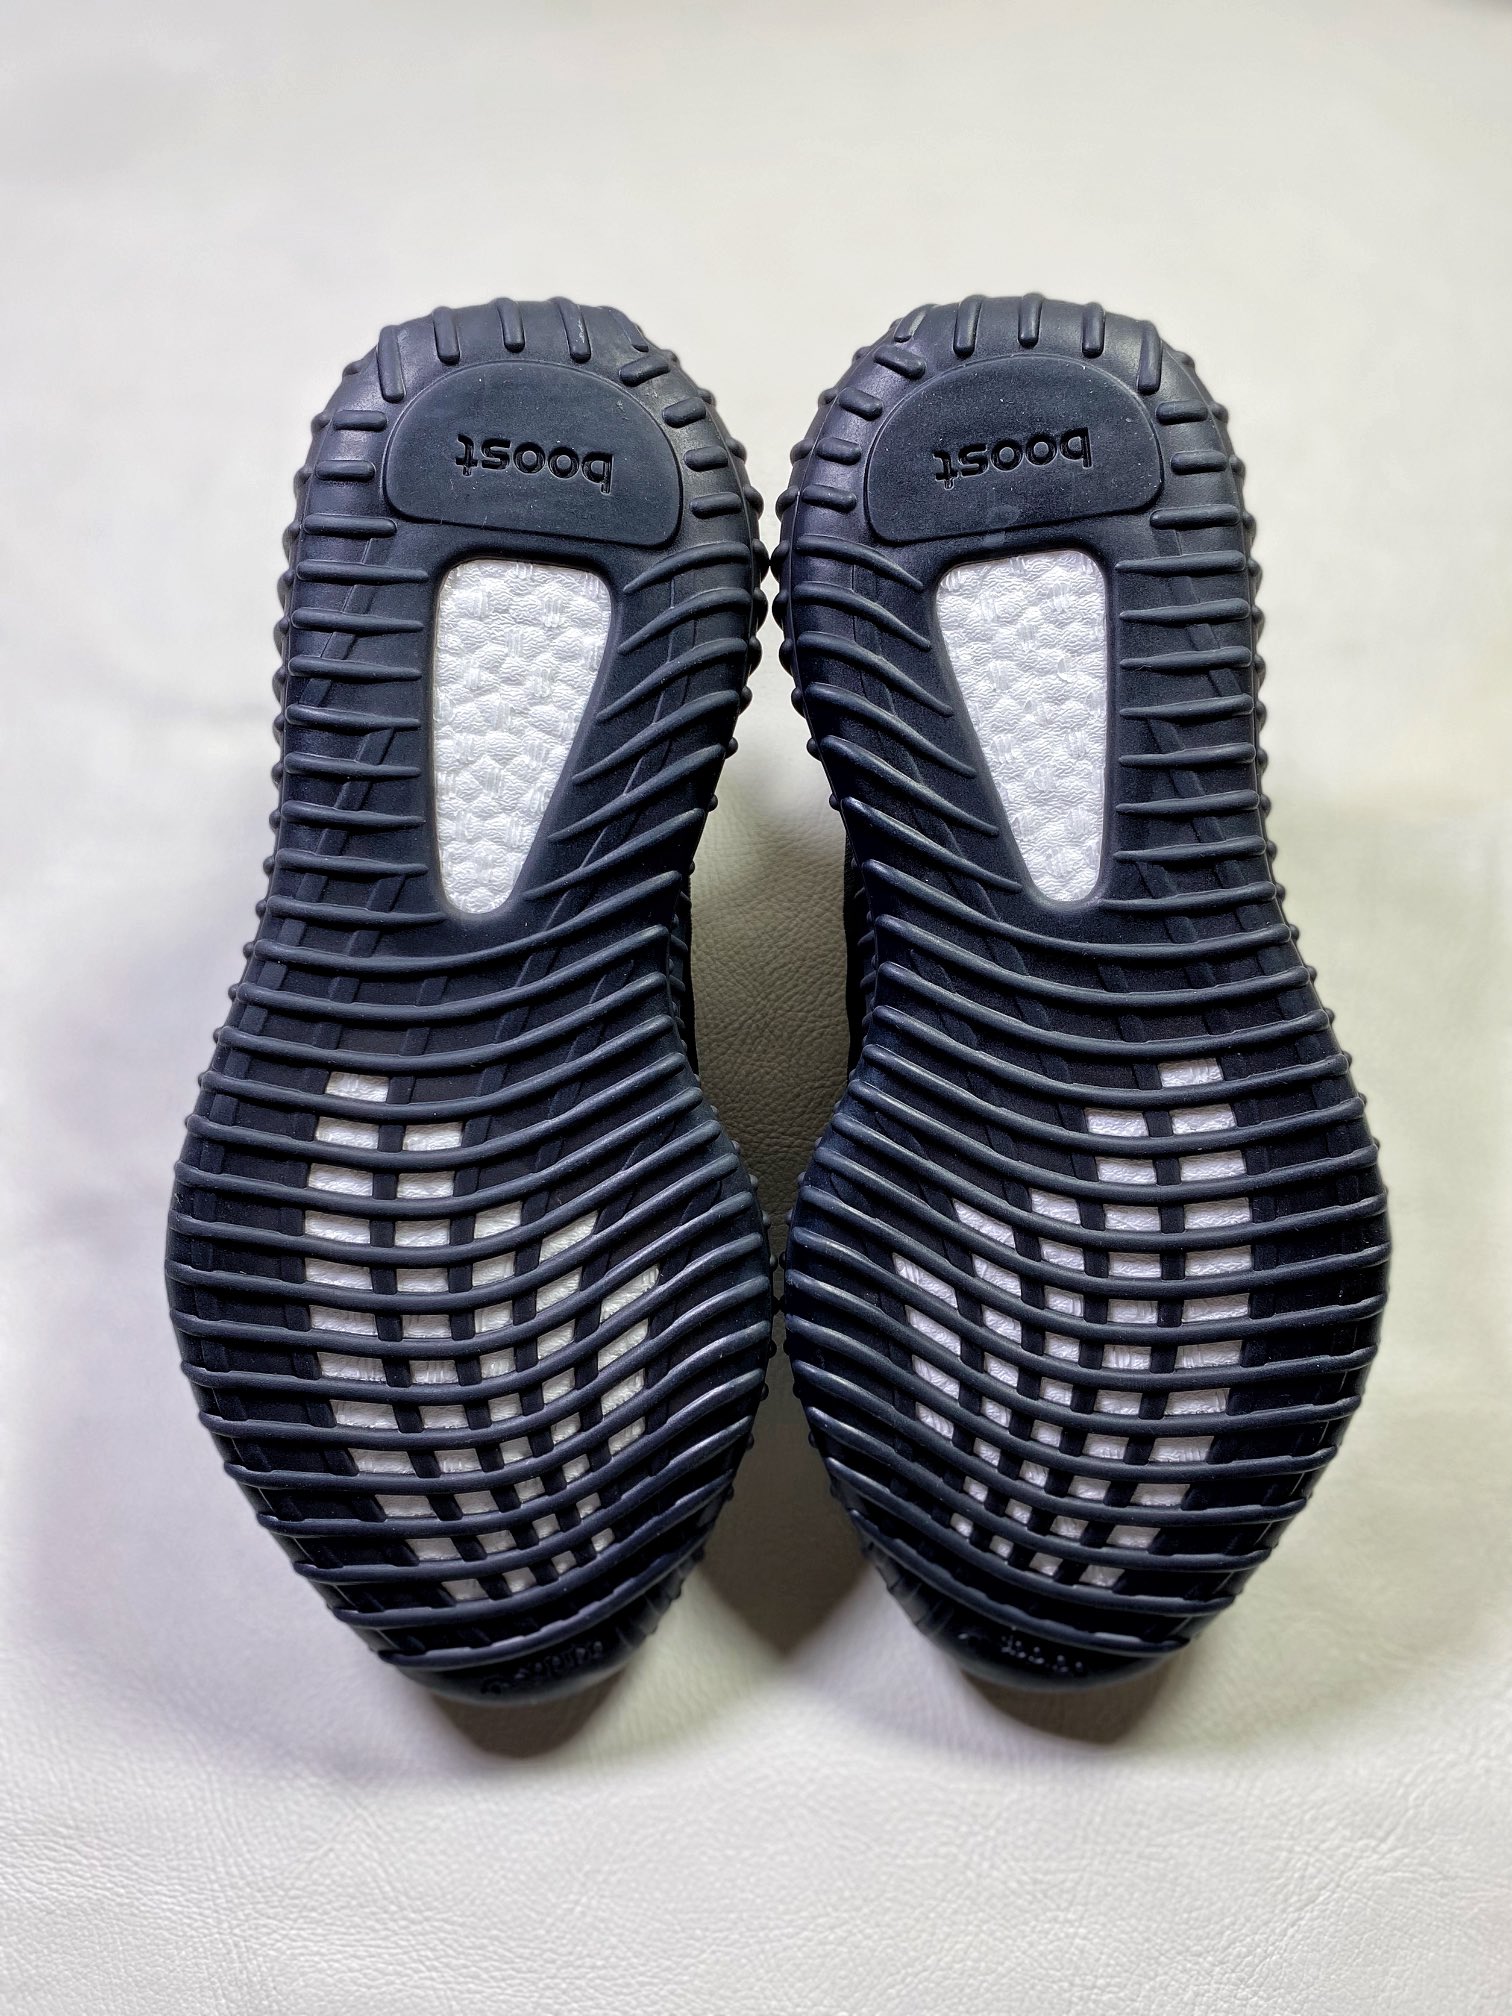 YEEZY350v2“MonoCinder”黑网纱最强性价比版本V2全新全透网纱系列懂货的看鞋型一眼便知